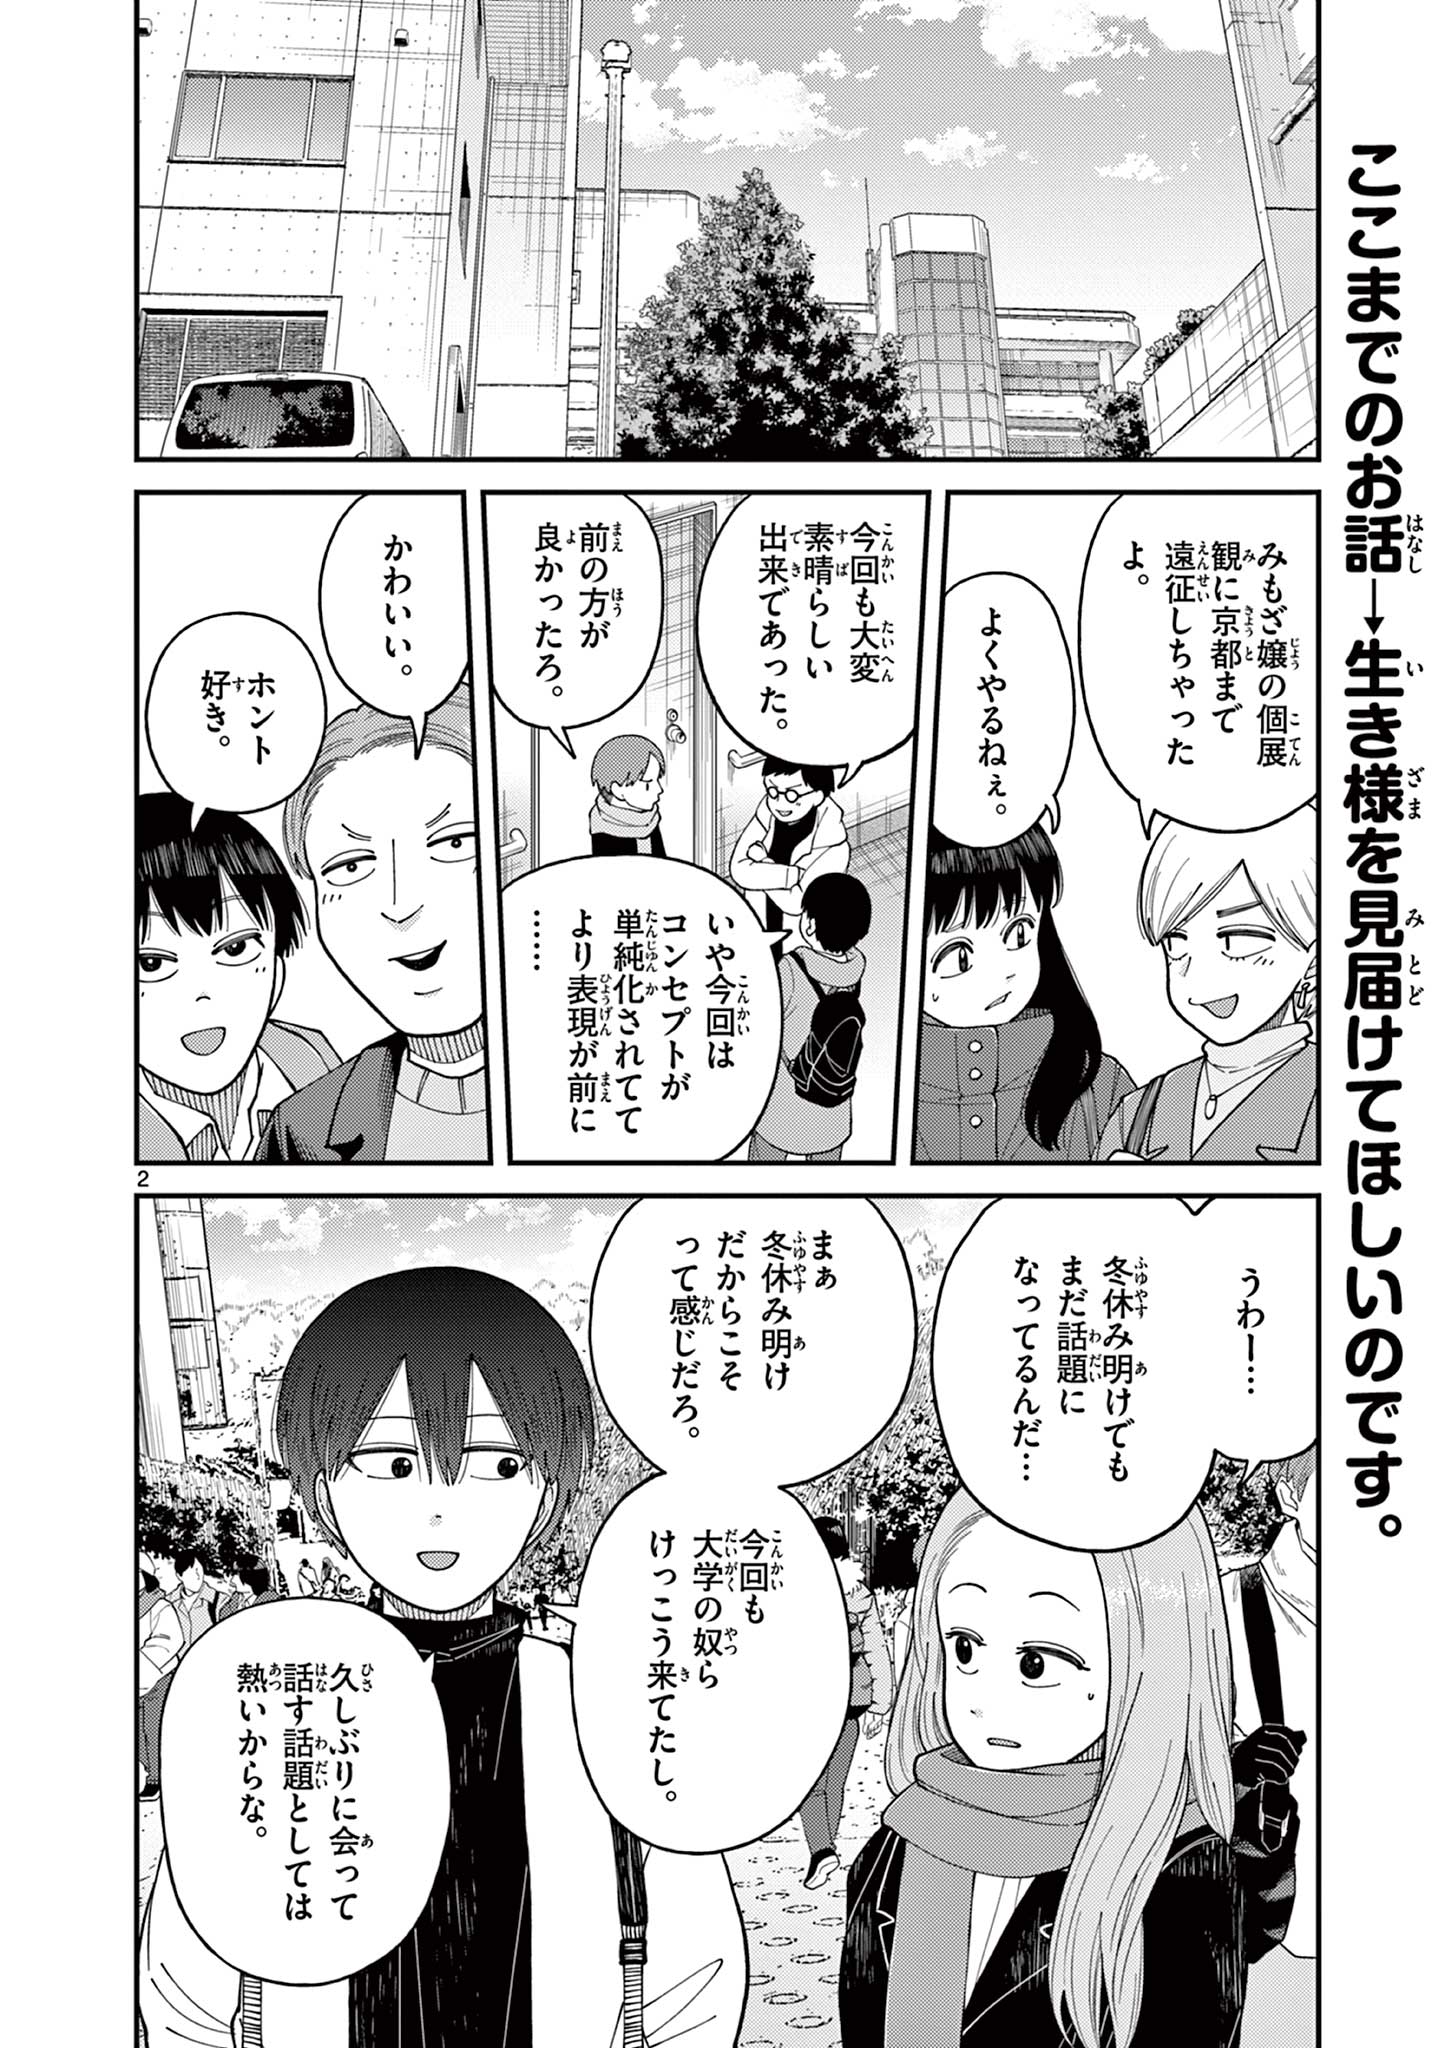 Mimozaizumu - Chapter 20_End - Page 2